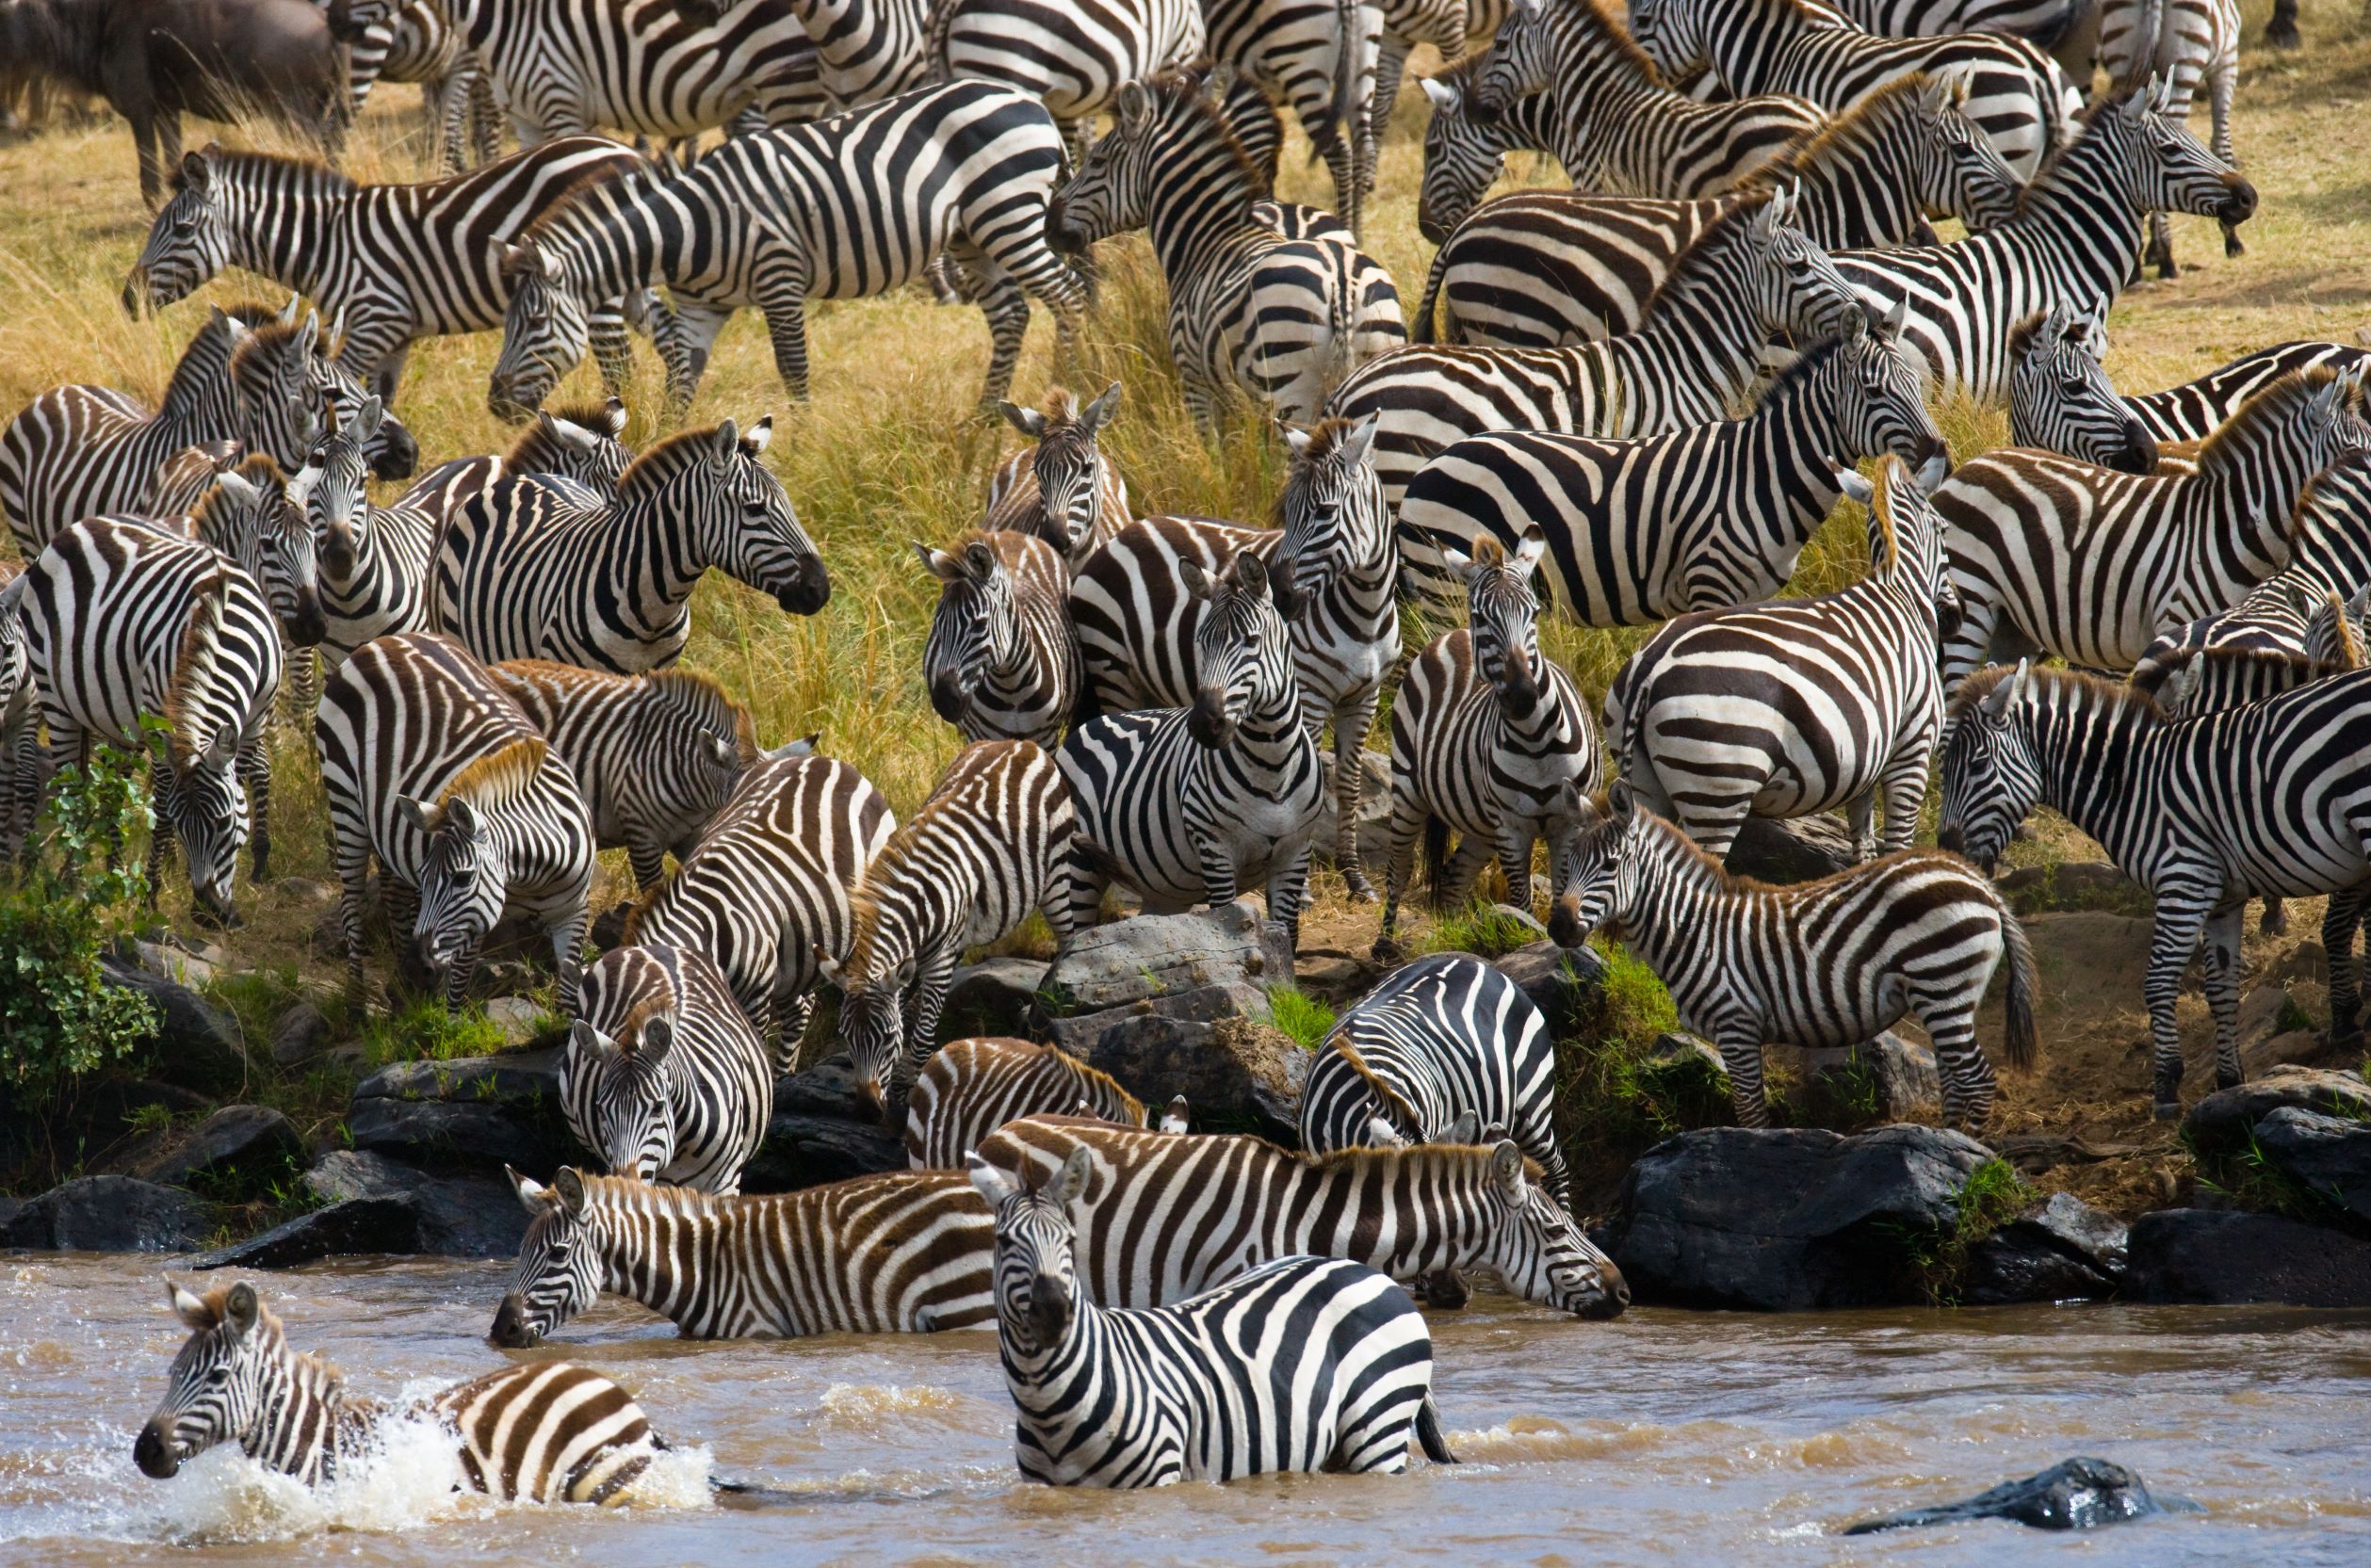 P&I 300 2021 front cover image zebra herd